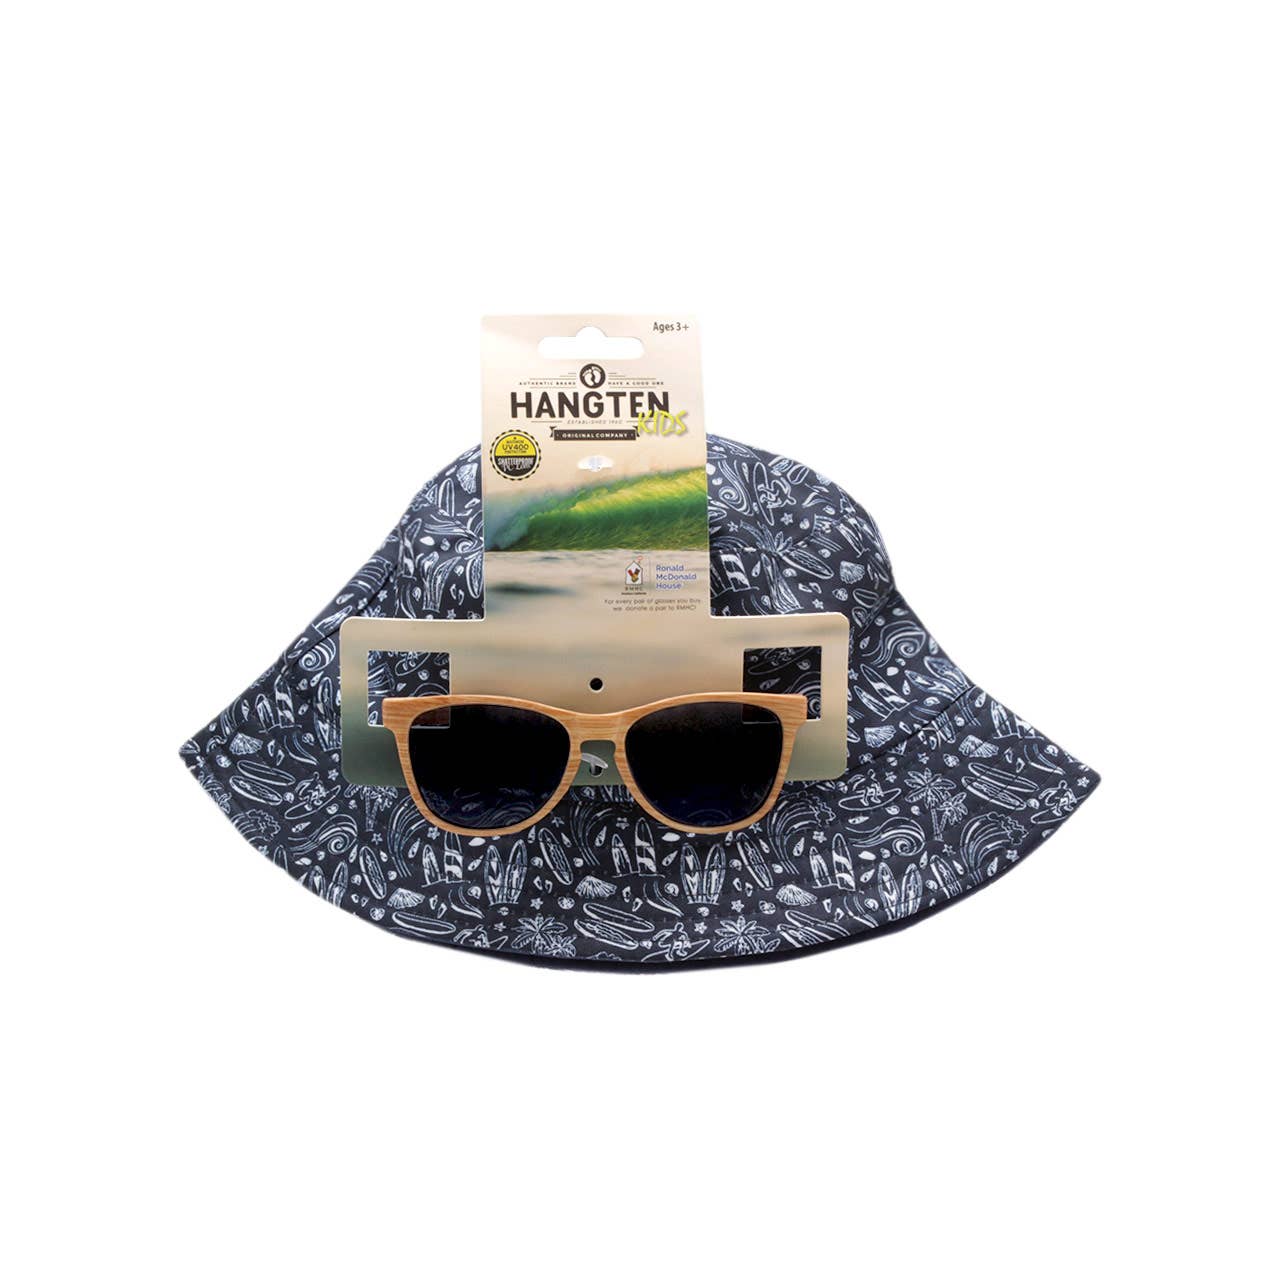 Shark Eyes, Inc - Kids Sunglasses with Hat Combo Set - Surfboard Print